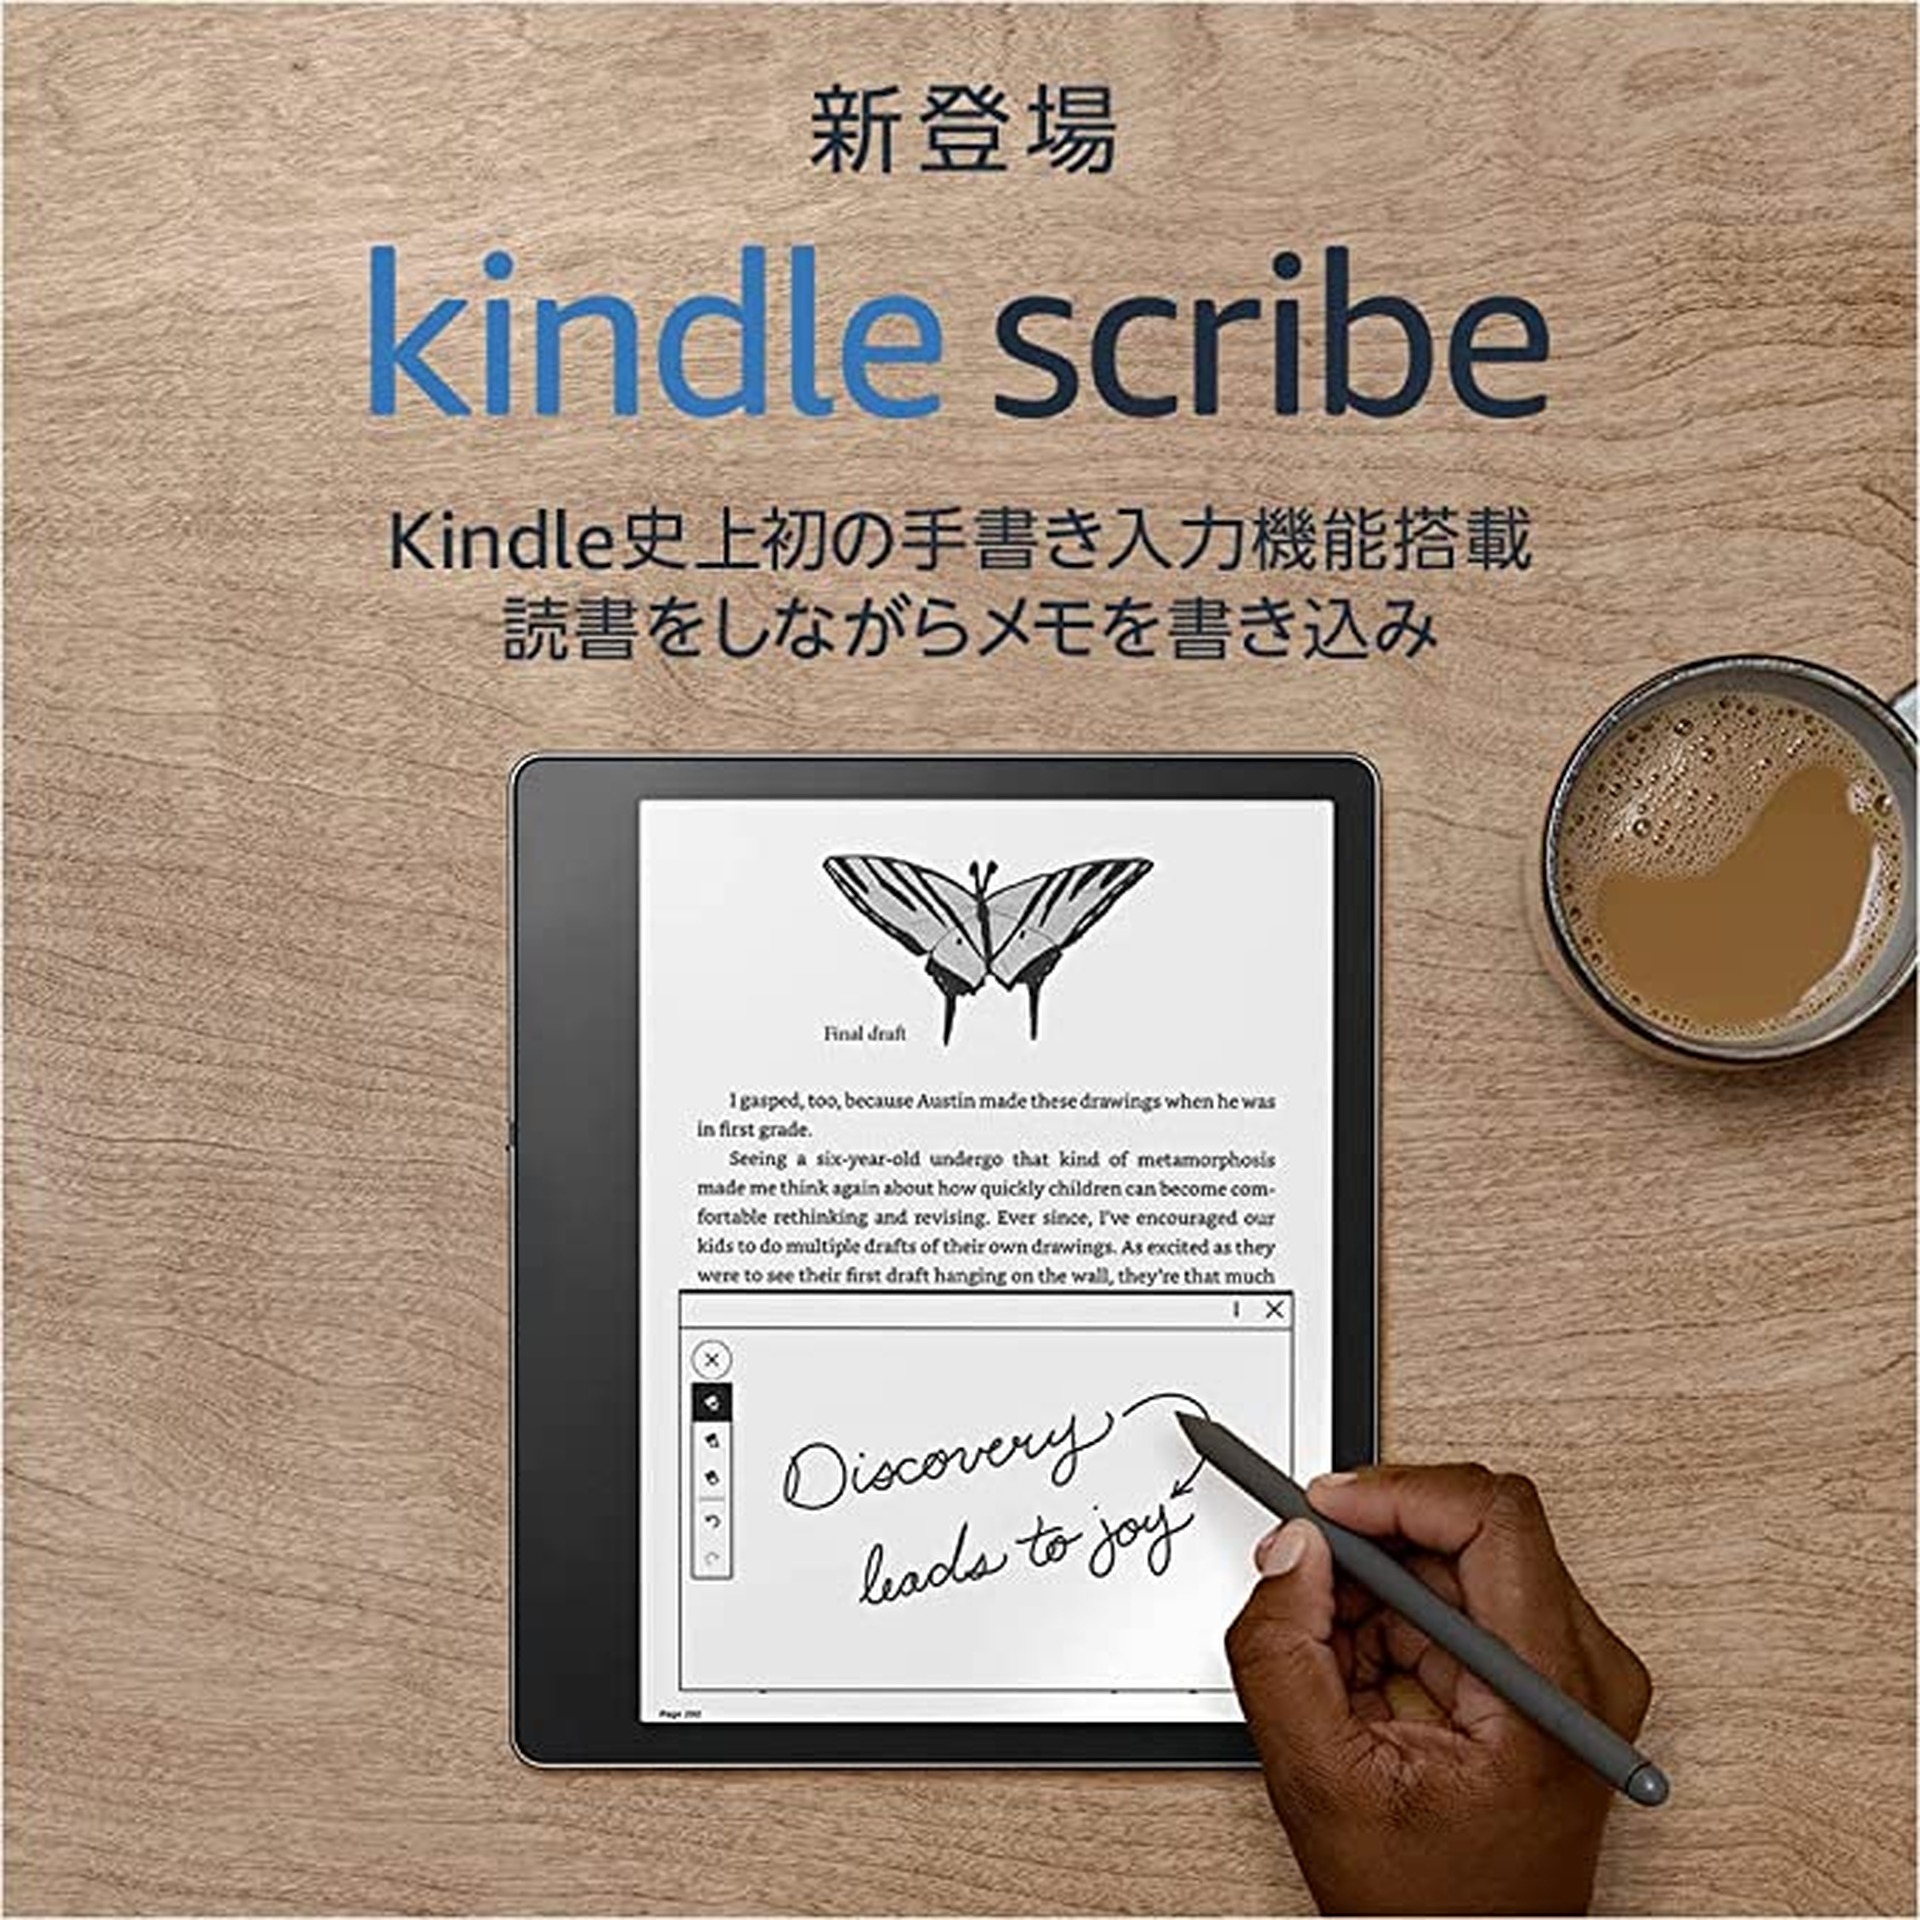 Kindleで手書きメモができる、ペン付属「Kindle Scribe」予約開始 